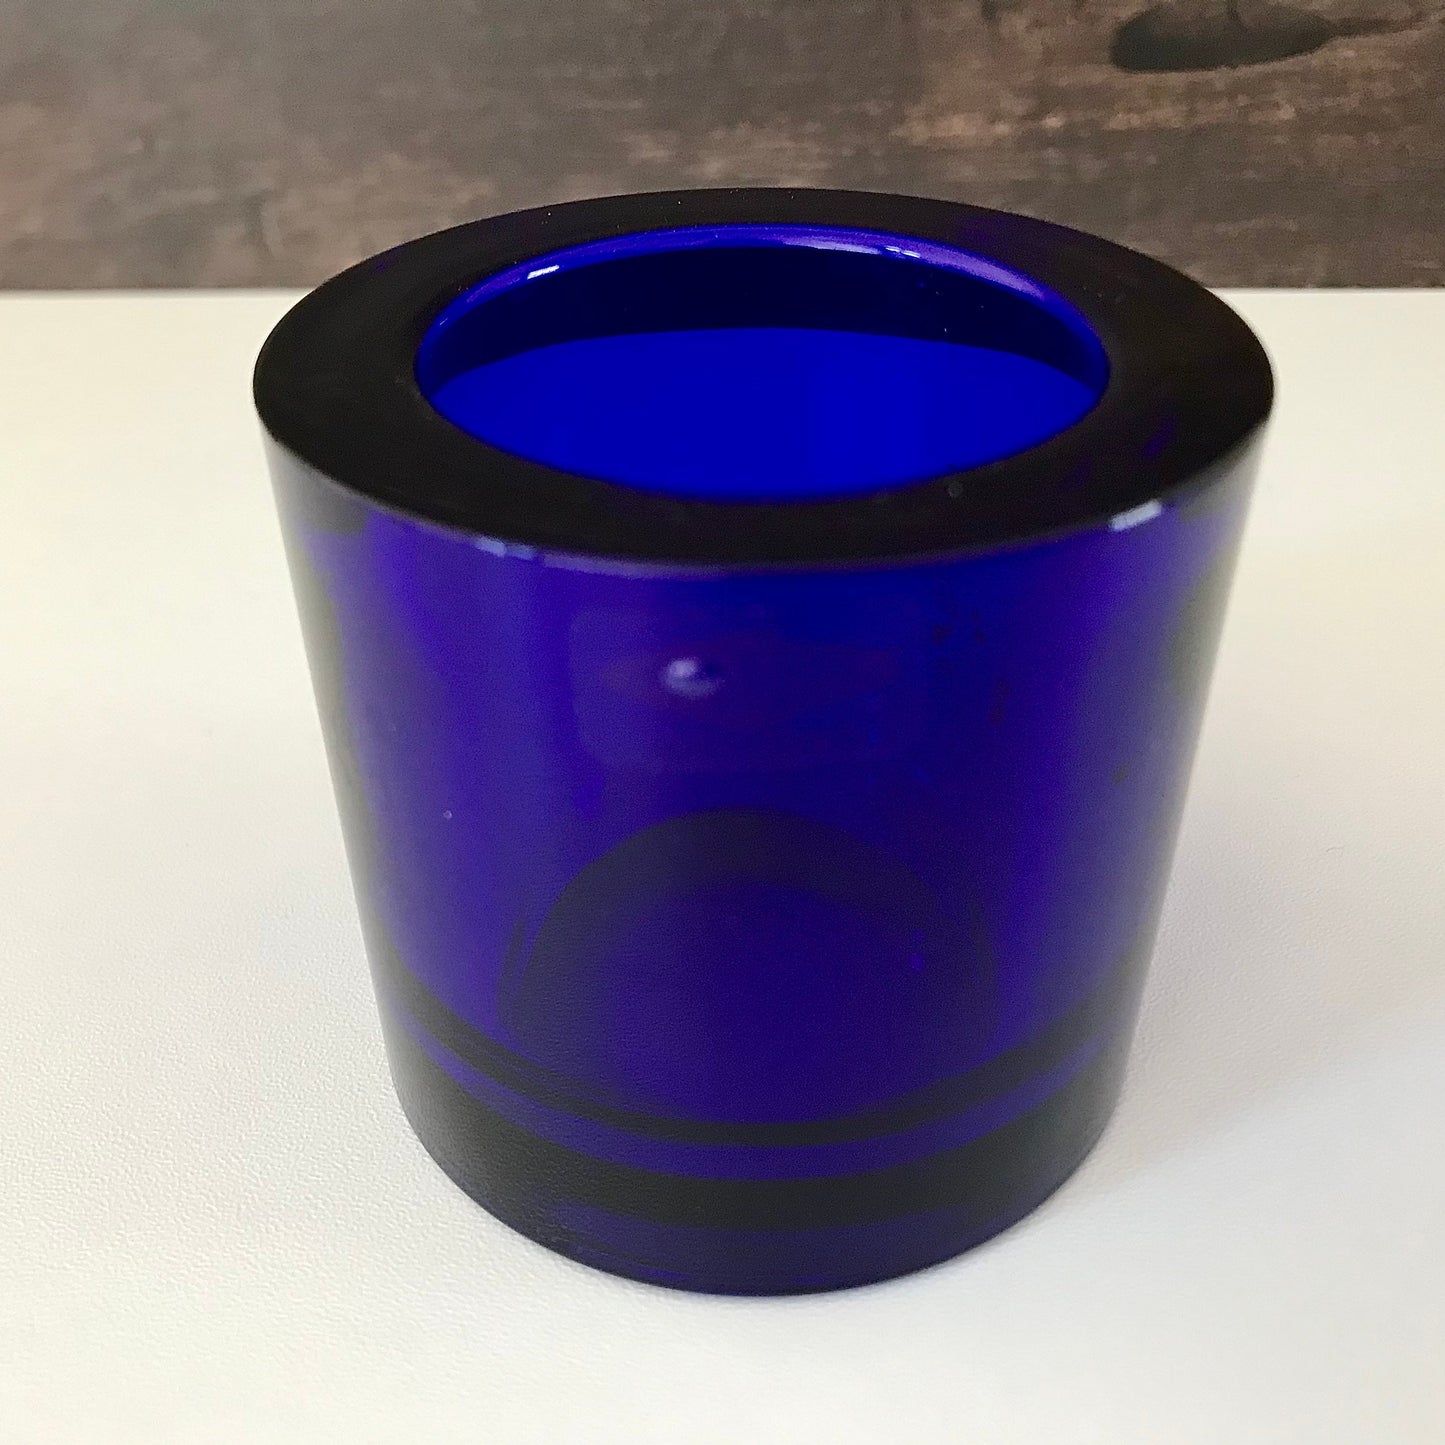 Iittala Nuutajarvi Kivi Glass Candle Tealight Holder Cobalt Blue Votive Finnish Design